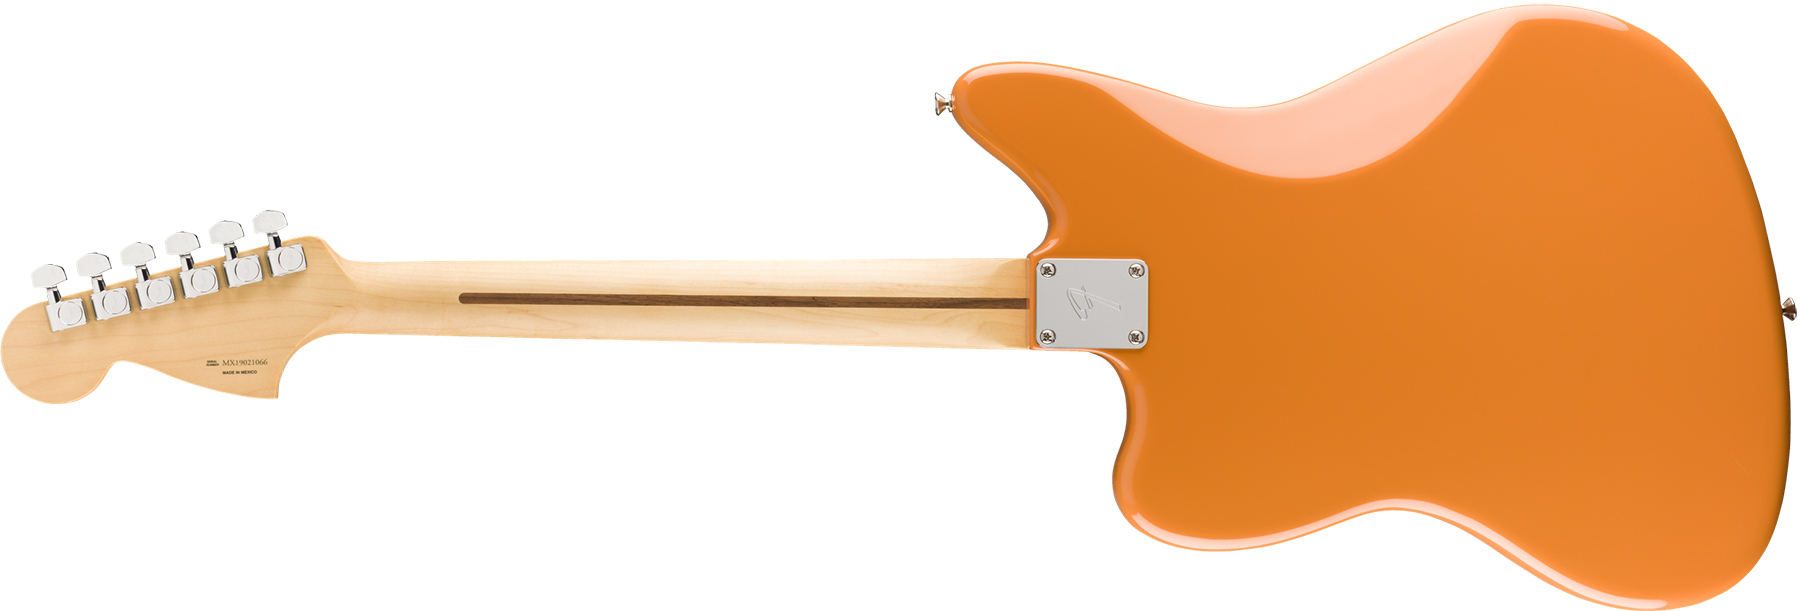 Fender Jaguar Player Mex Hs Pf - Capri Orange - Guitarra electrica retro rock - Variation 1